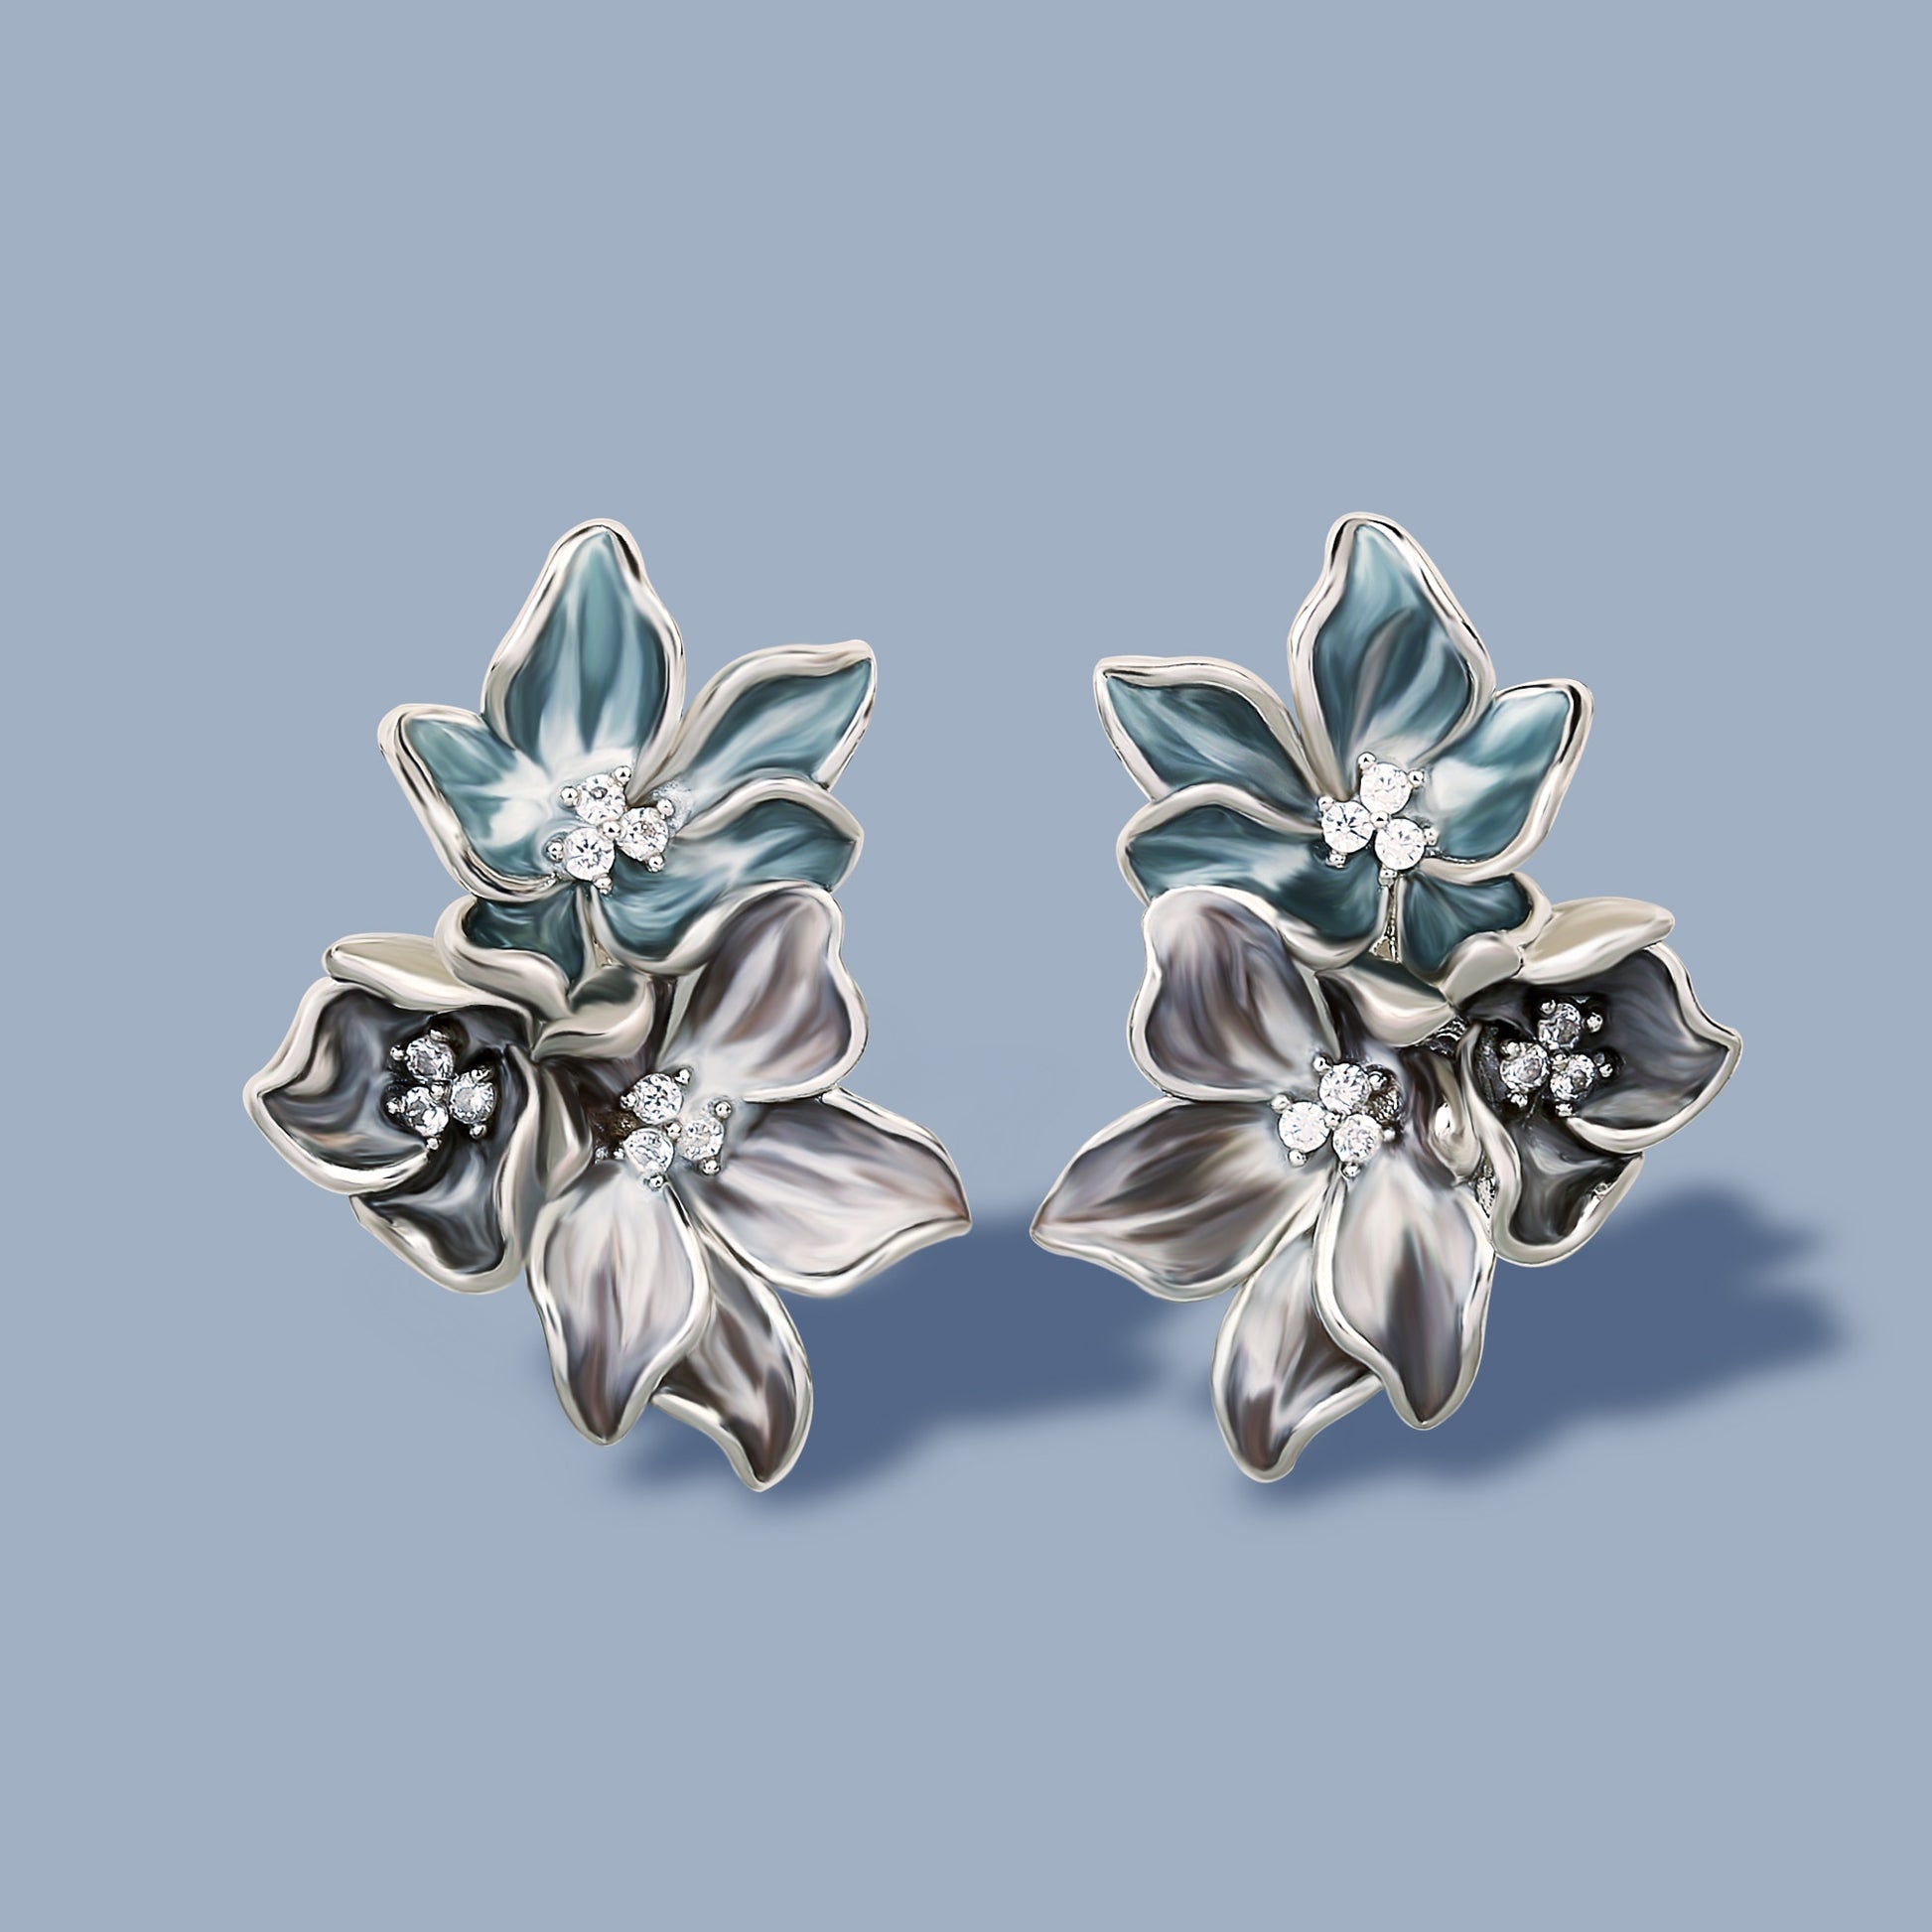 Elegant Flower Earrings for Women with Handmade Enamel in 925 Silver